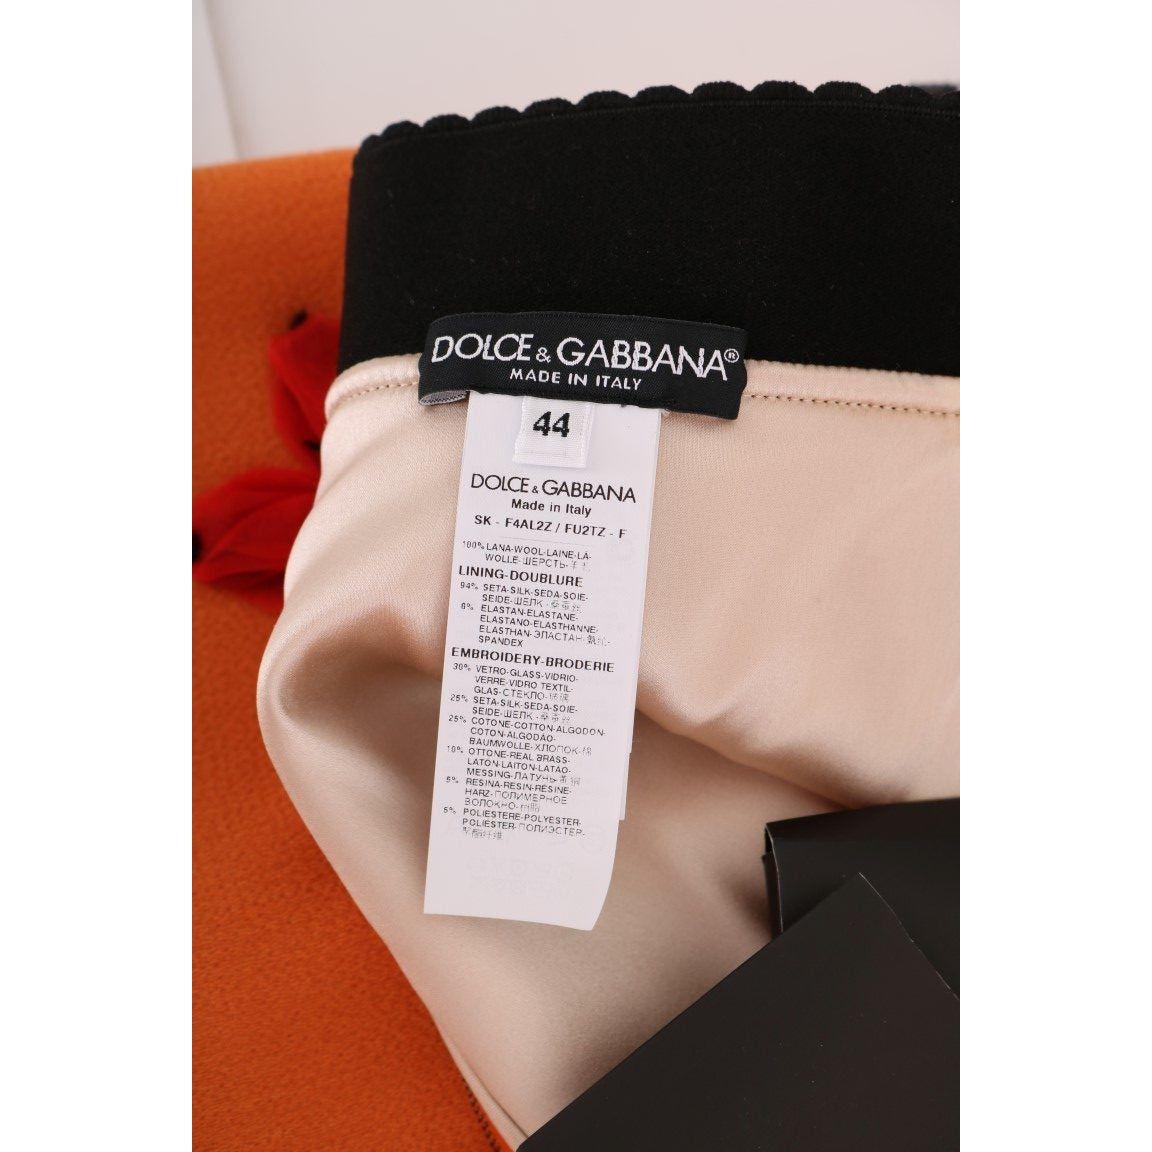 Dolce & Gabbana Embellished Wool Skirt in Vivid Orange orange-wool-crystal-sequin-appliques-skirt